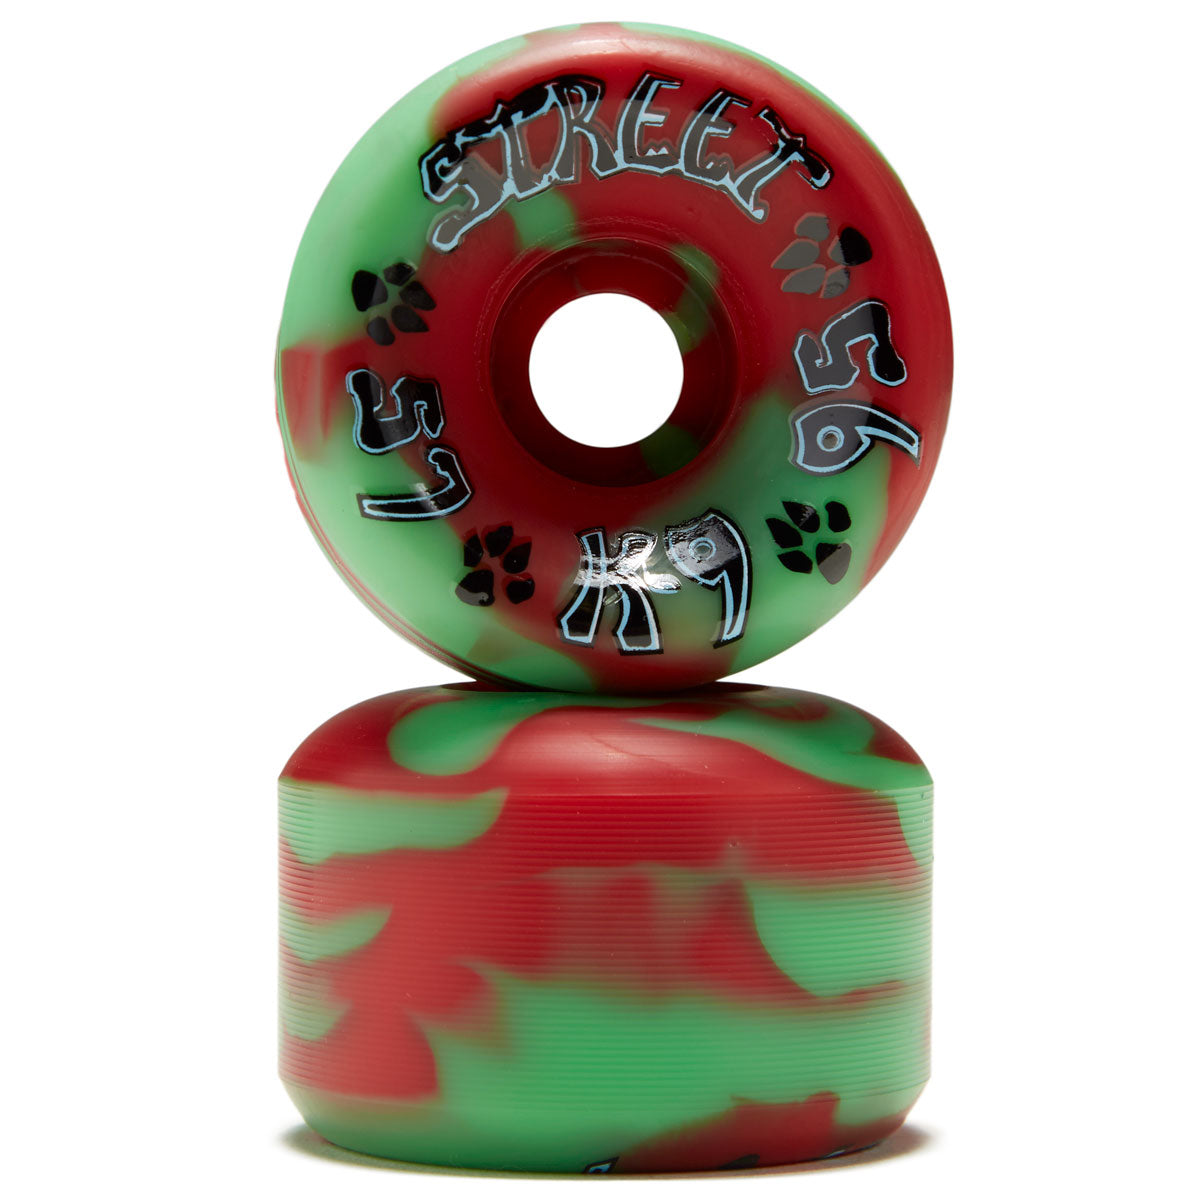 Dogtown K-9 95a Skateboard Wheels - Red/Green Swirl - 57mm image 2